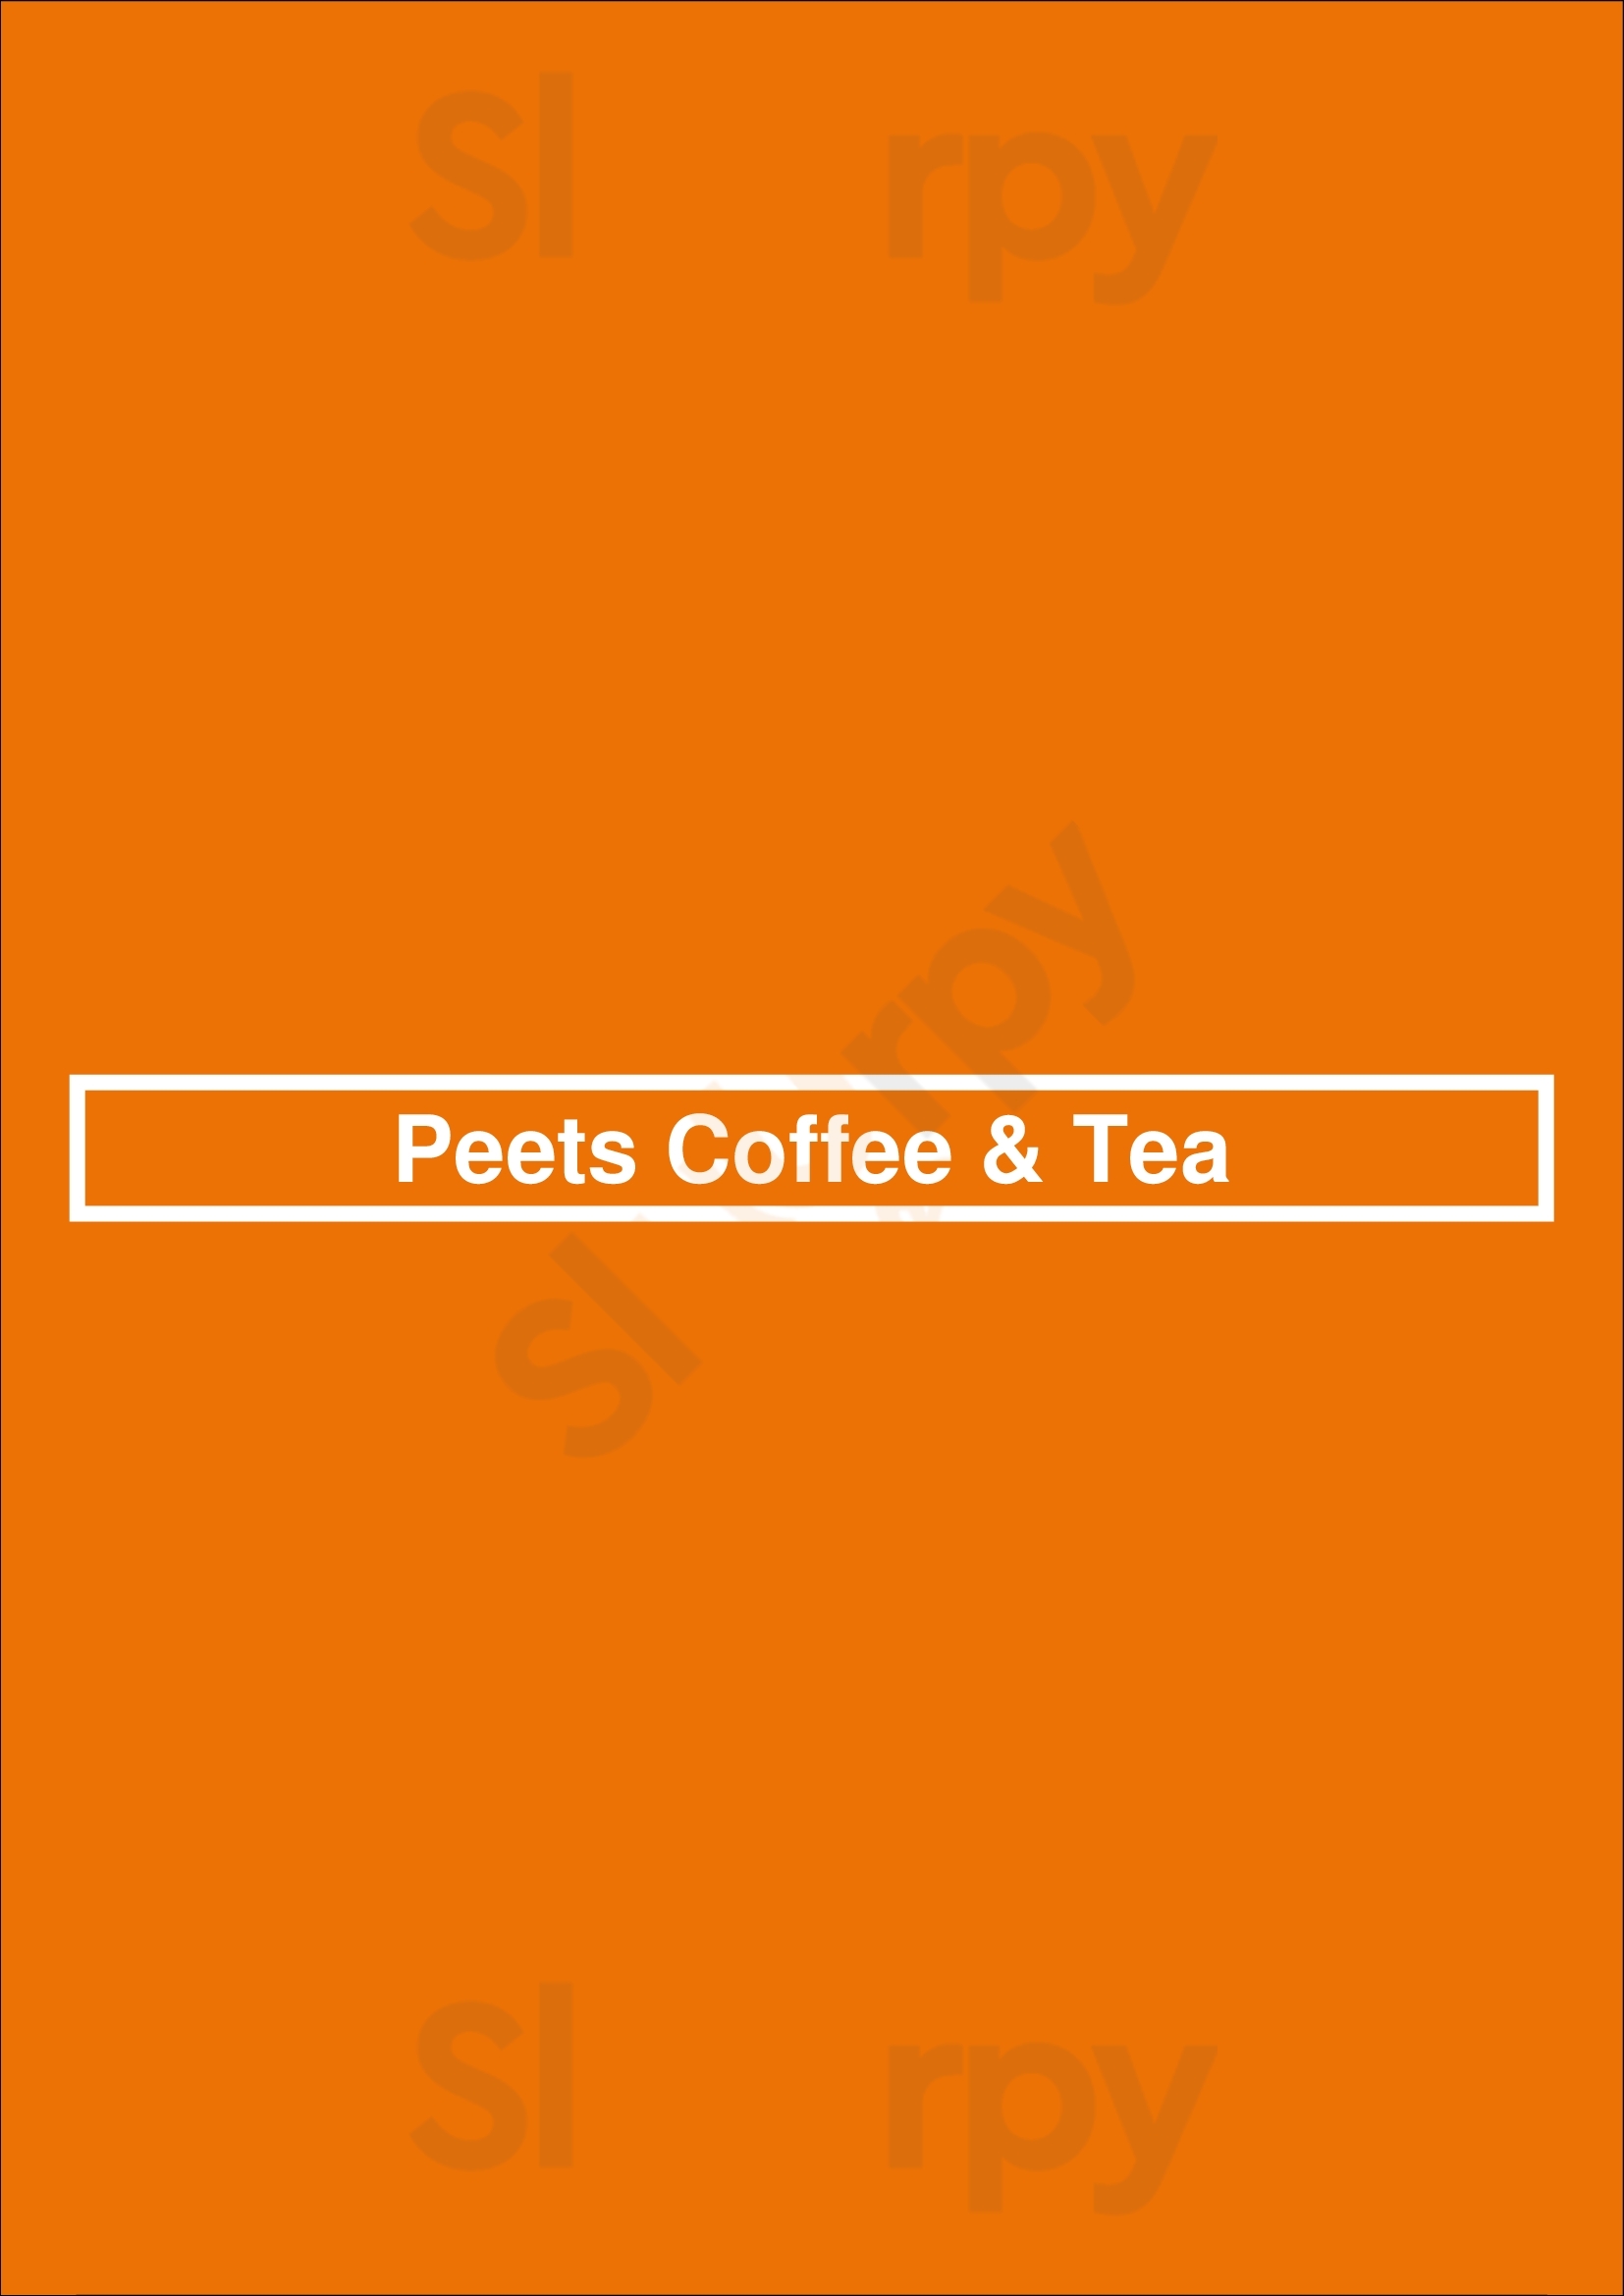 Peets Coffee & Tea San Jose Menu - 1